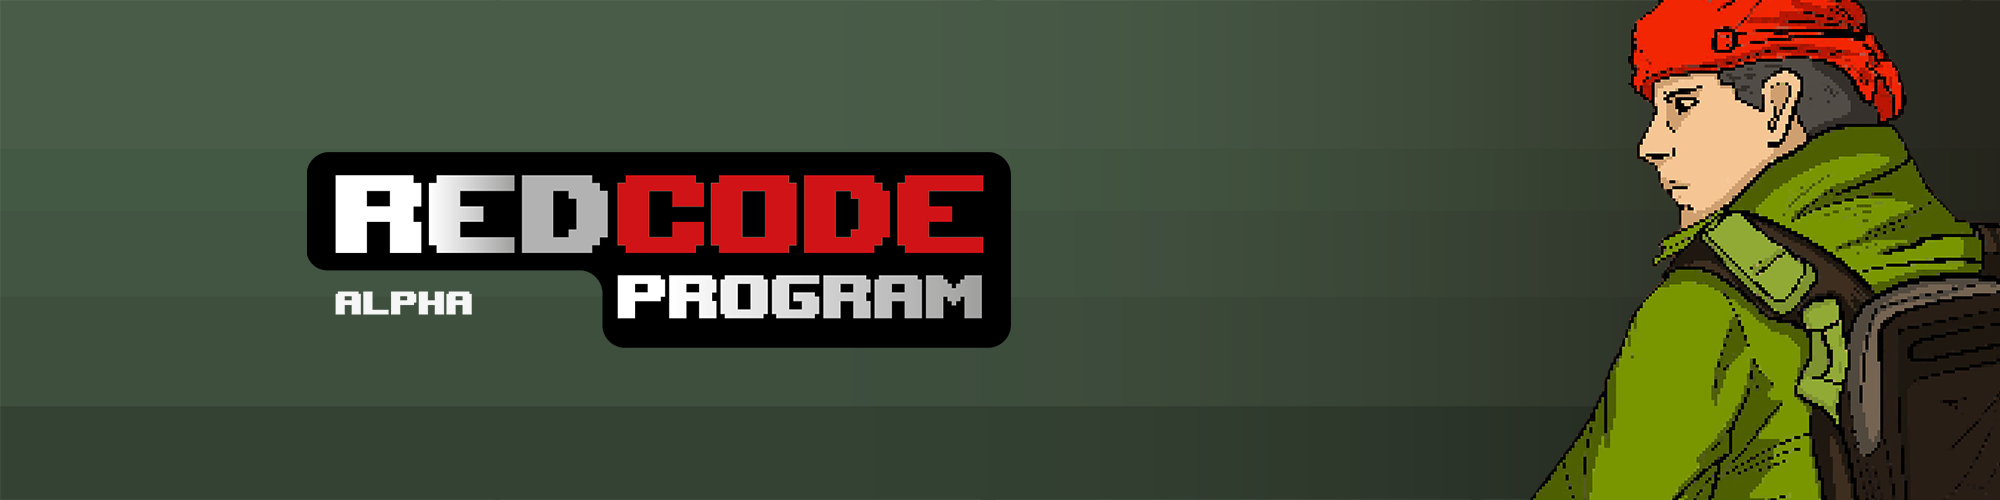 Redcode Program